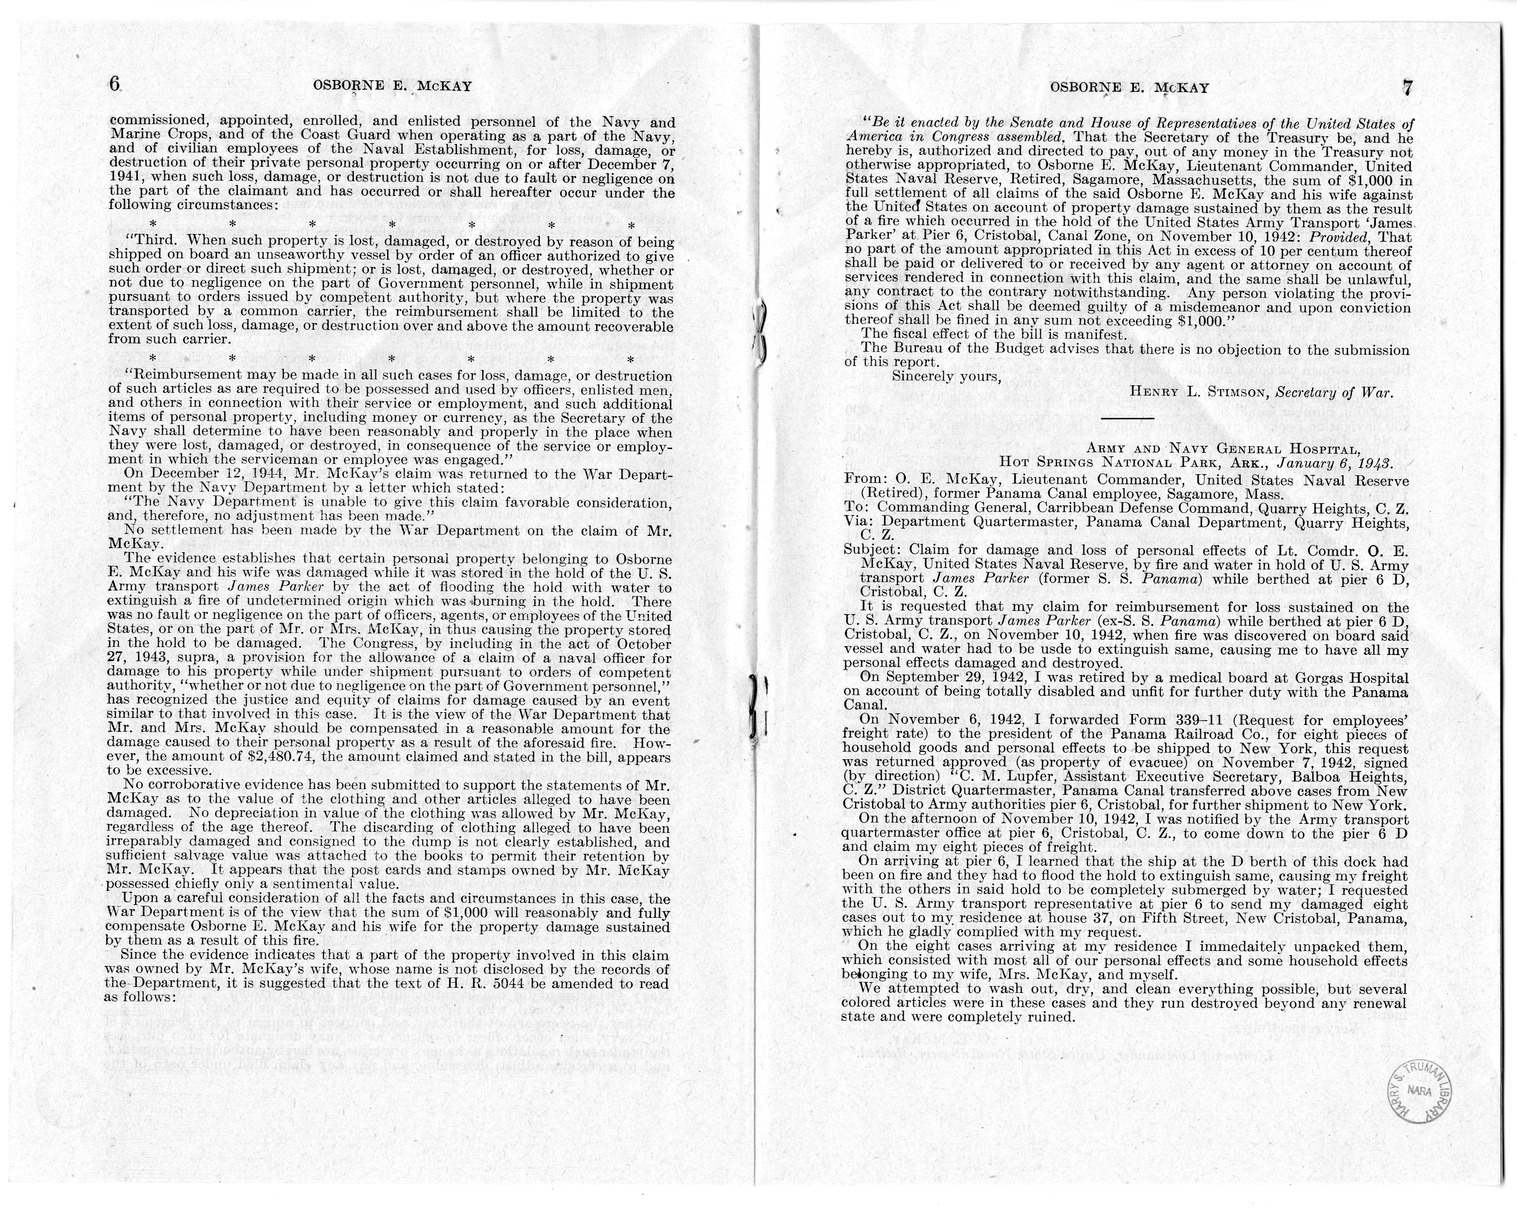 Memorandum from Frederick Bailey to M. C. Latta, H.R. 2336, For the Relief of Osborne E. McKay, with Attachments